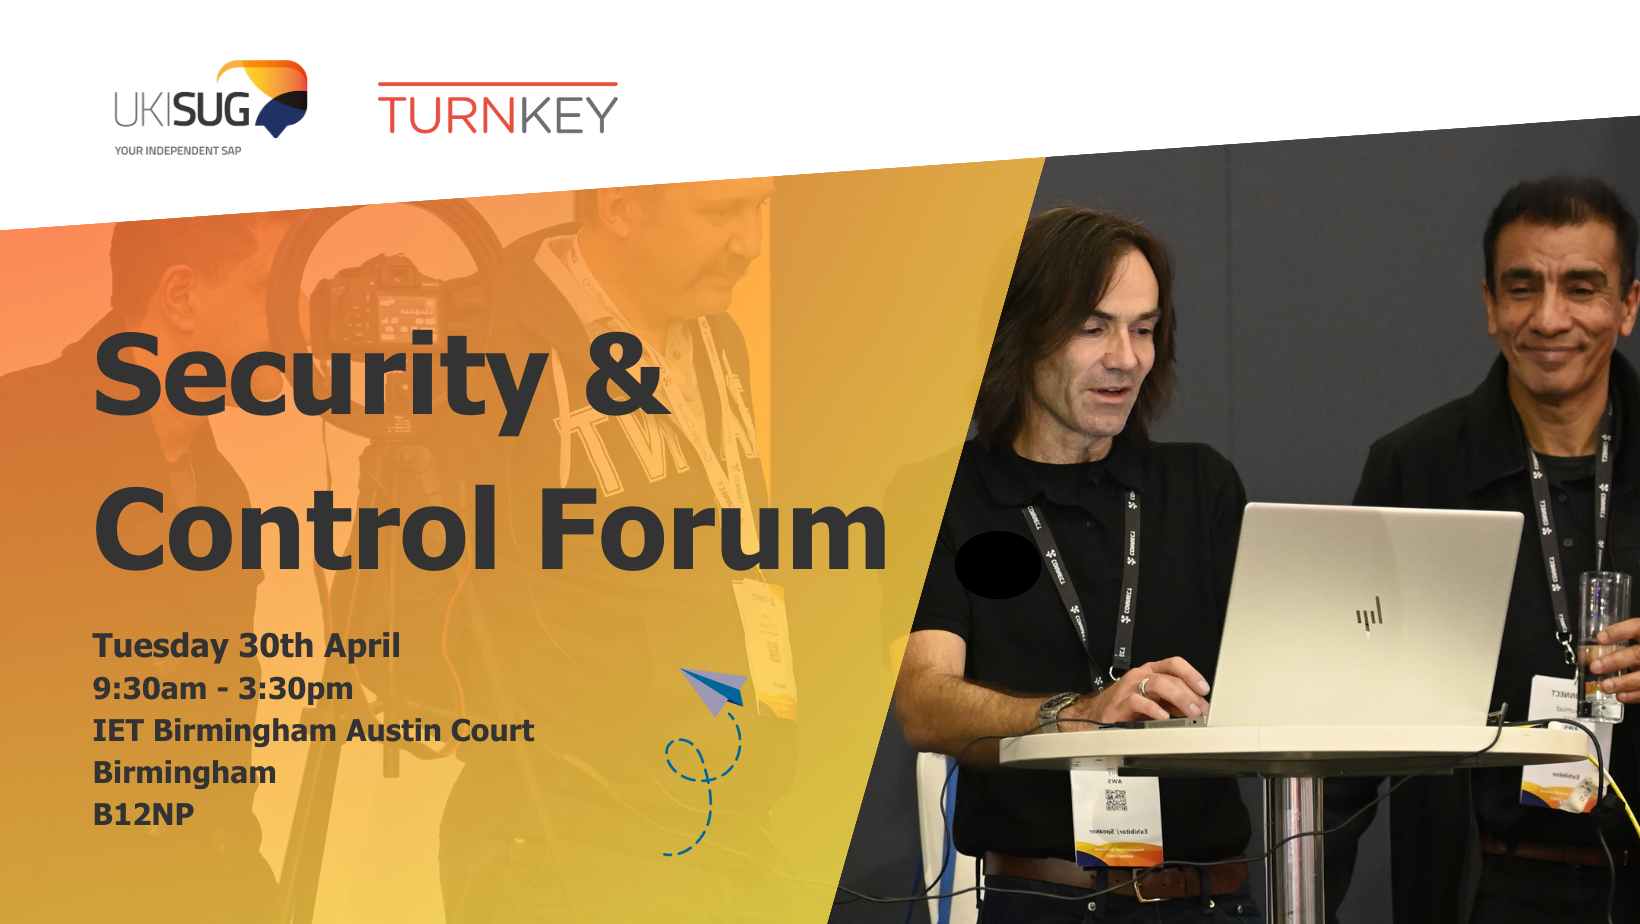 Security & Control Forum - Turnkey